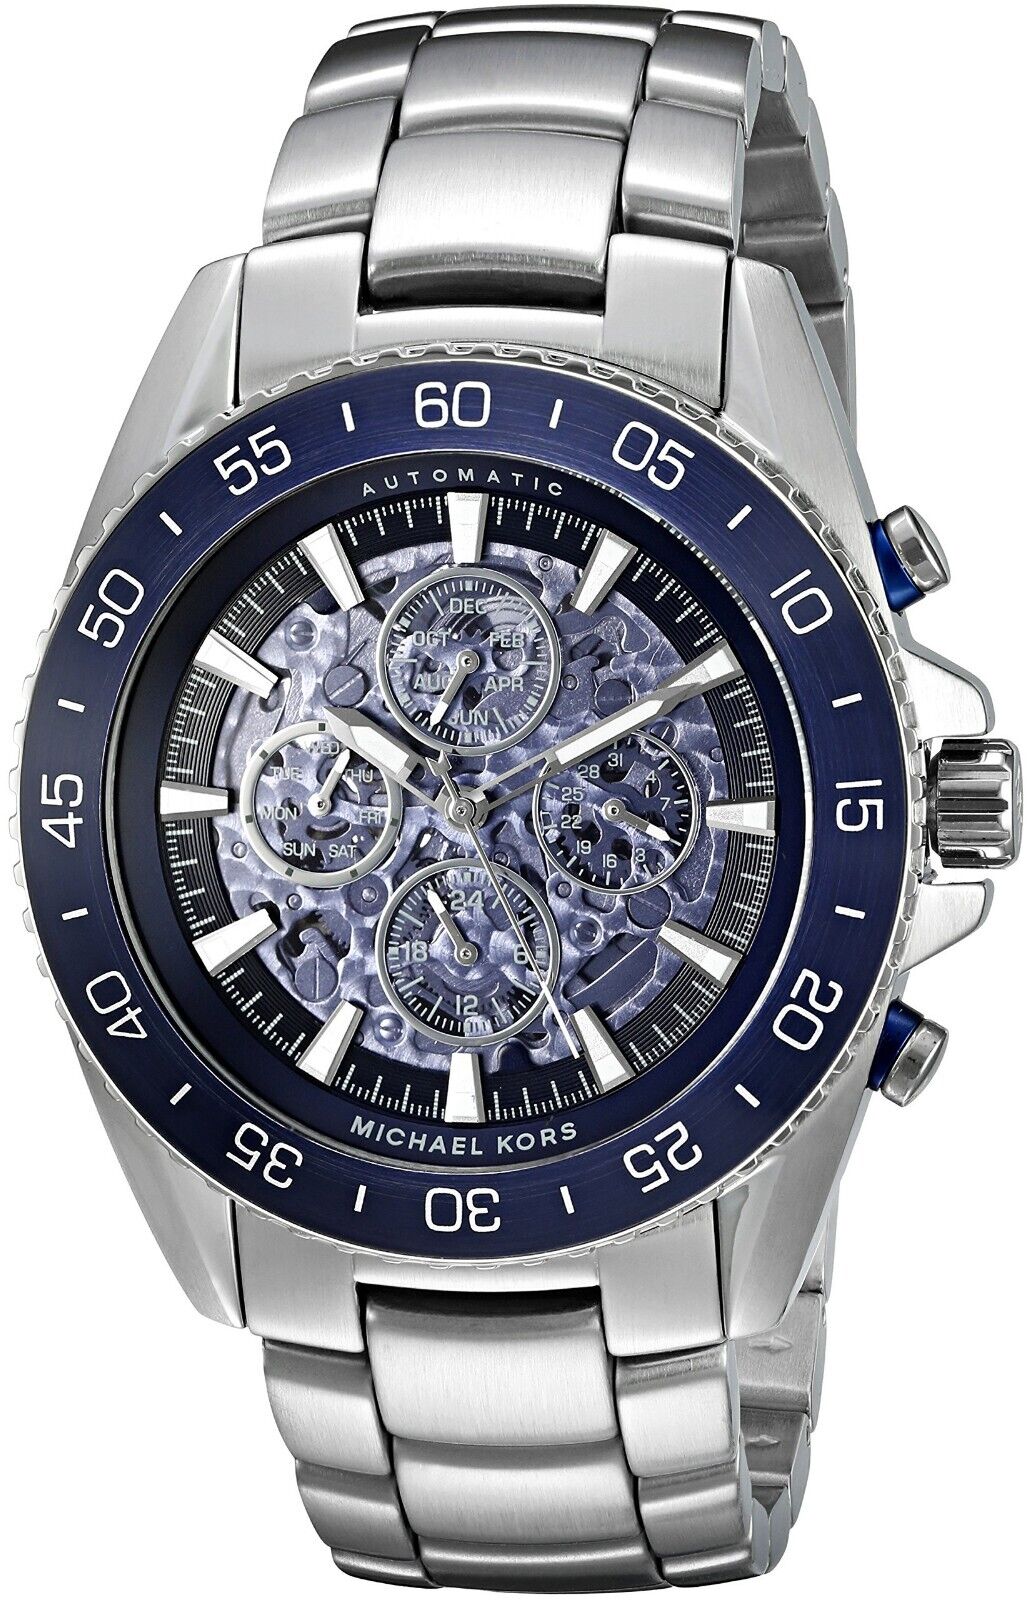 Michael Kors Men's Jet Master Silver-Toned Watch MK9024